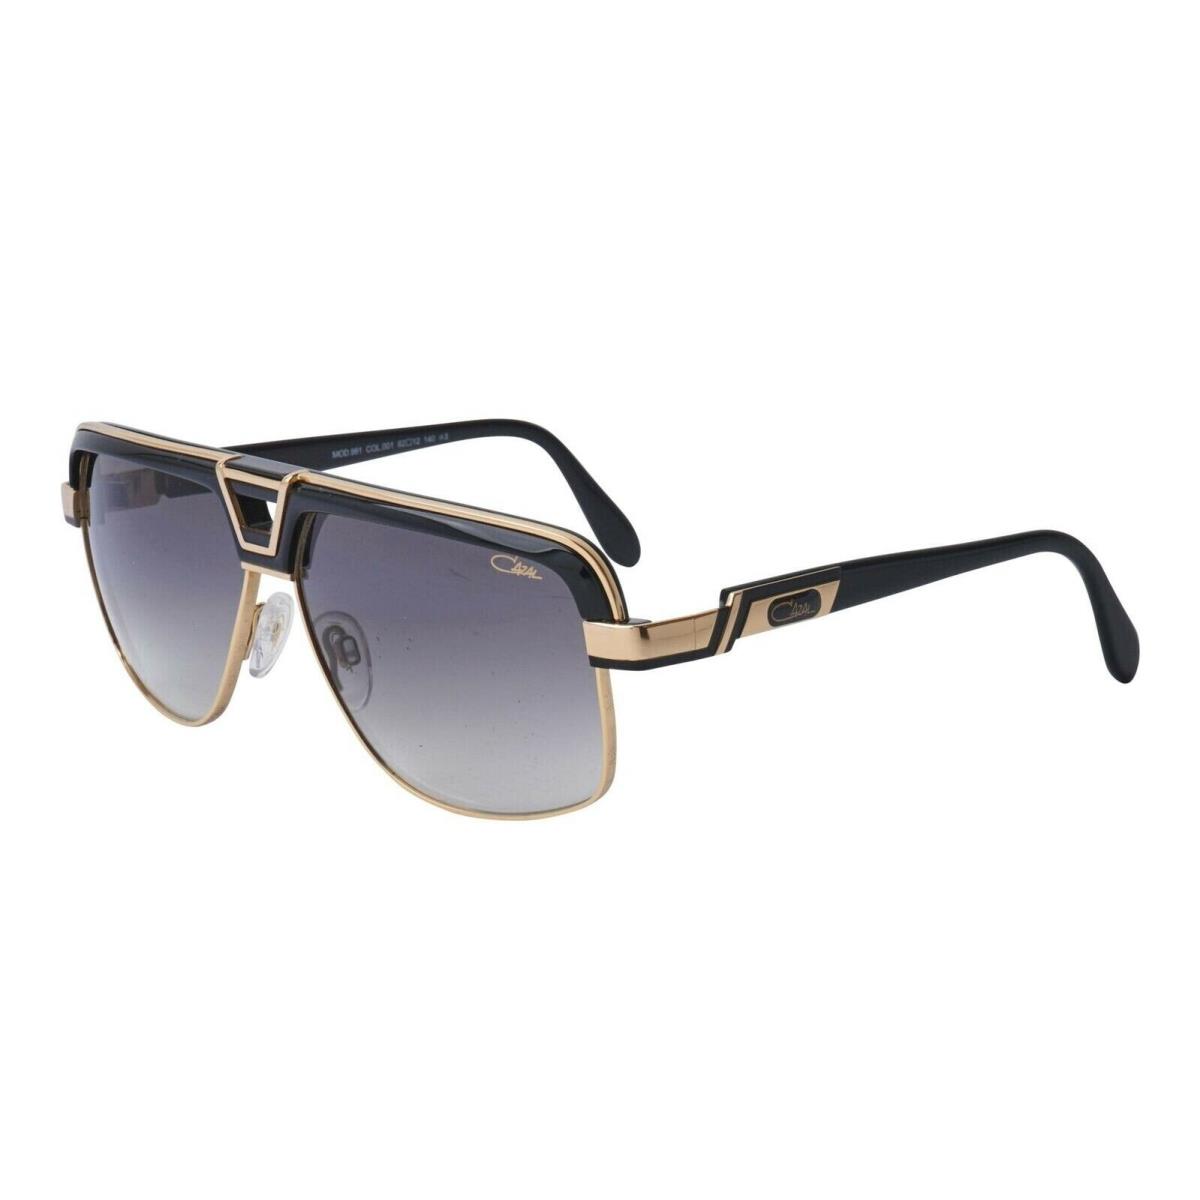 Cazal Legends 991 Black Gold/grey Shaded 001 Sunglasses - Frame: Black, Lens: Grey Shaded